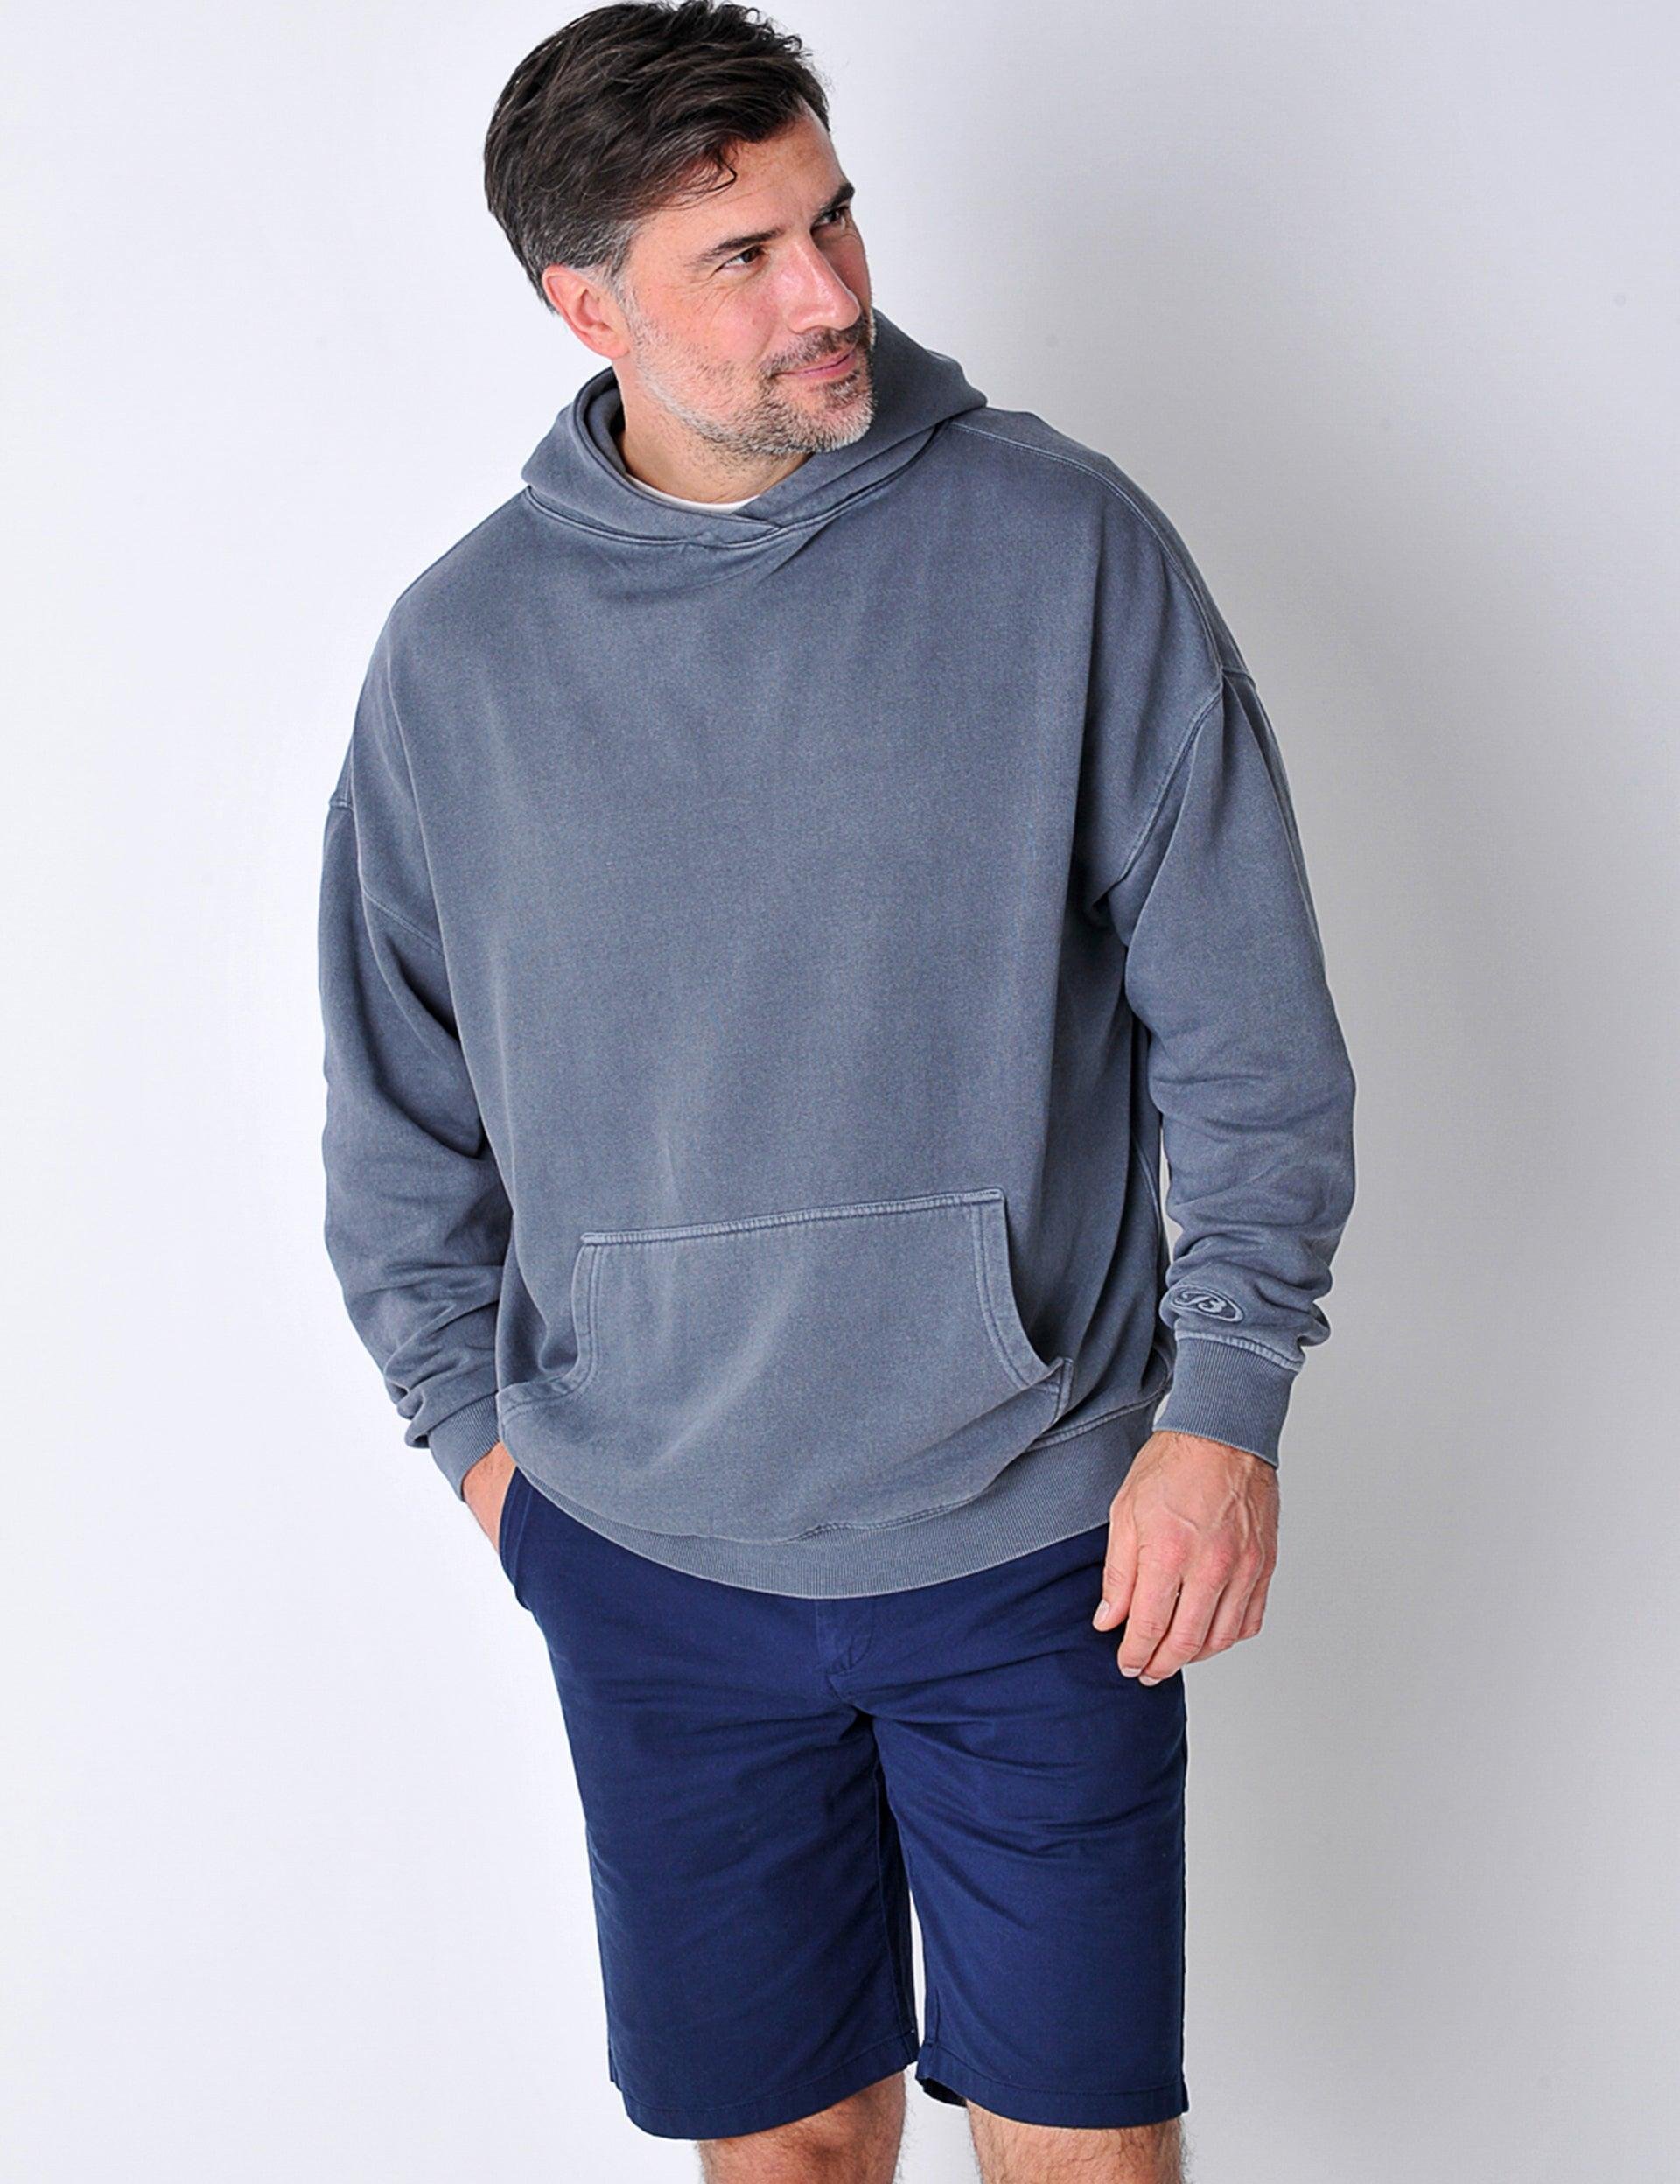 Berwick Sweatshirt in Gunmetal Grey by BURGS